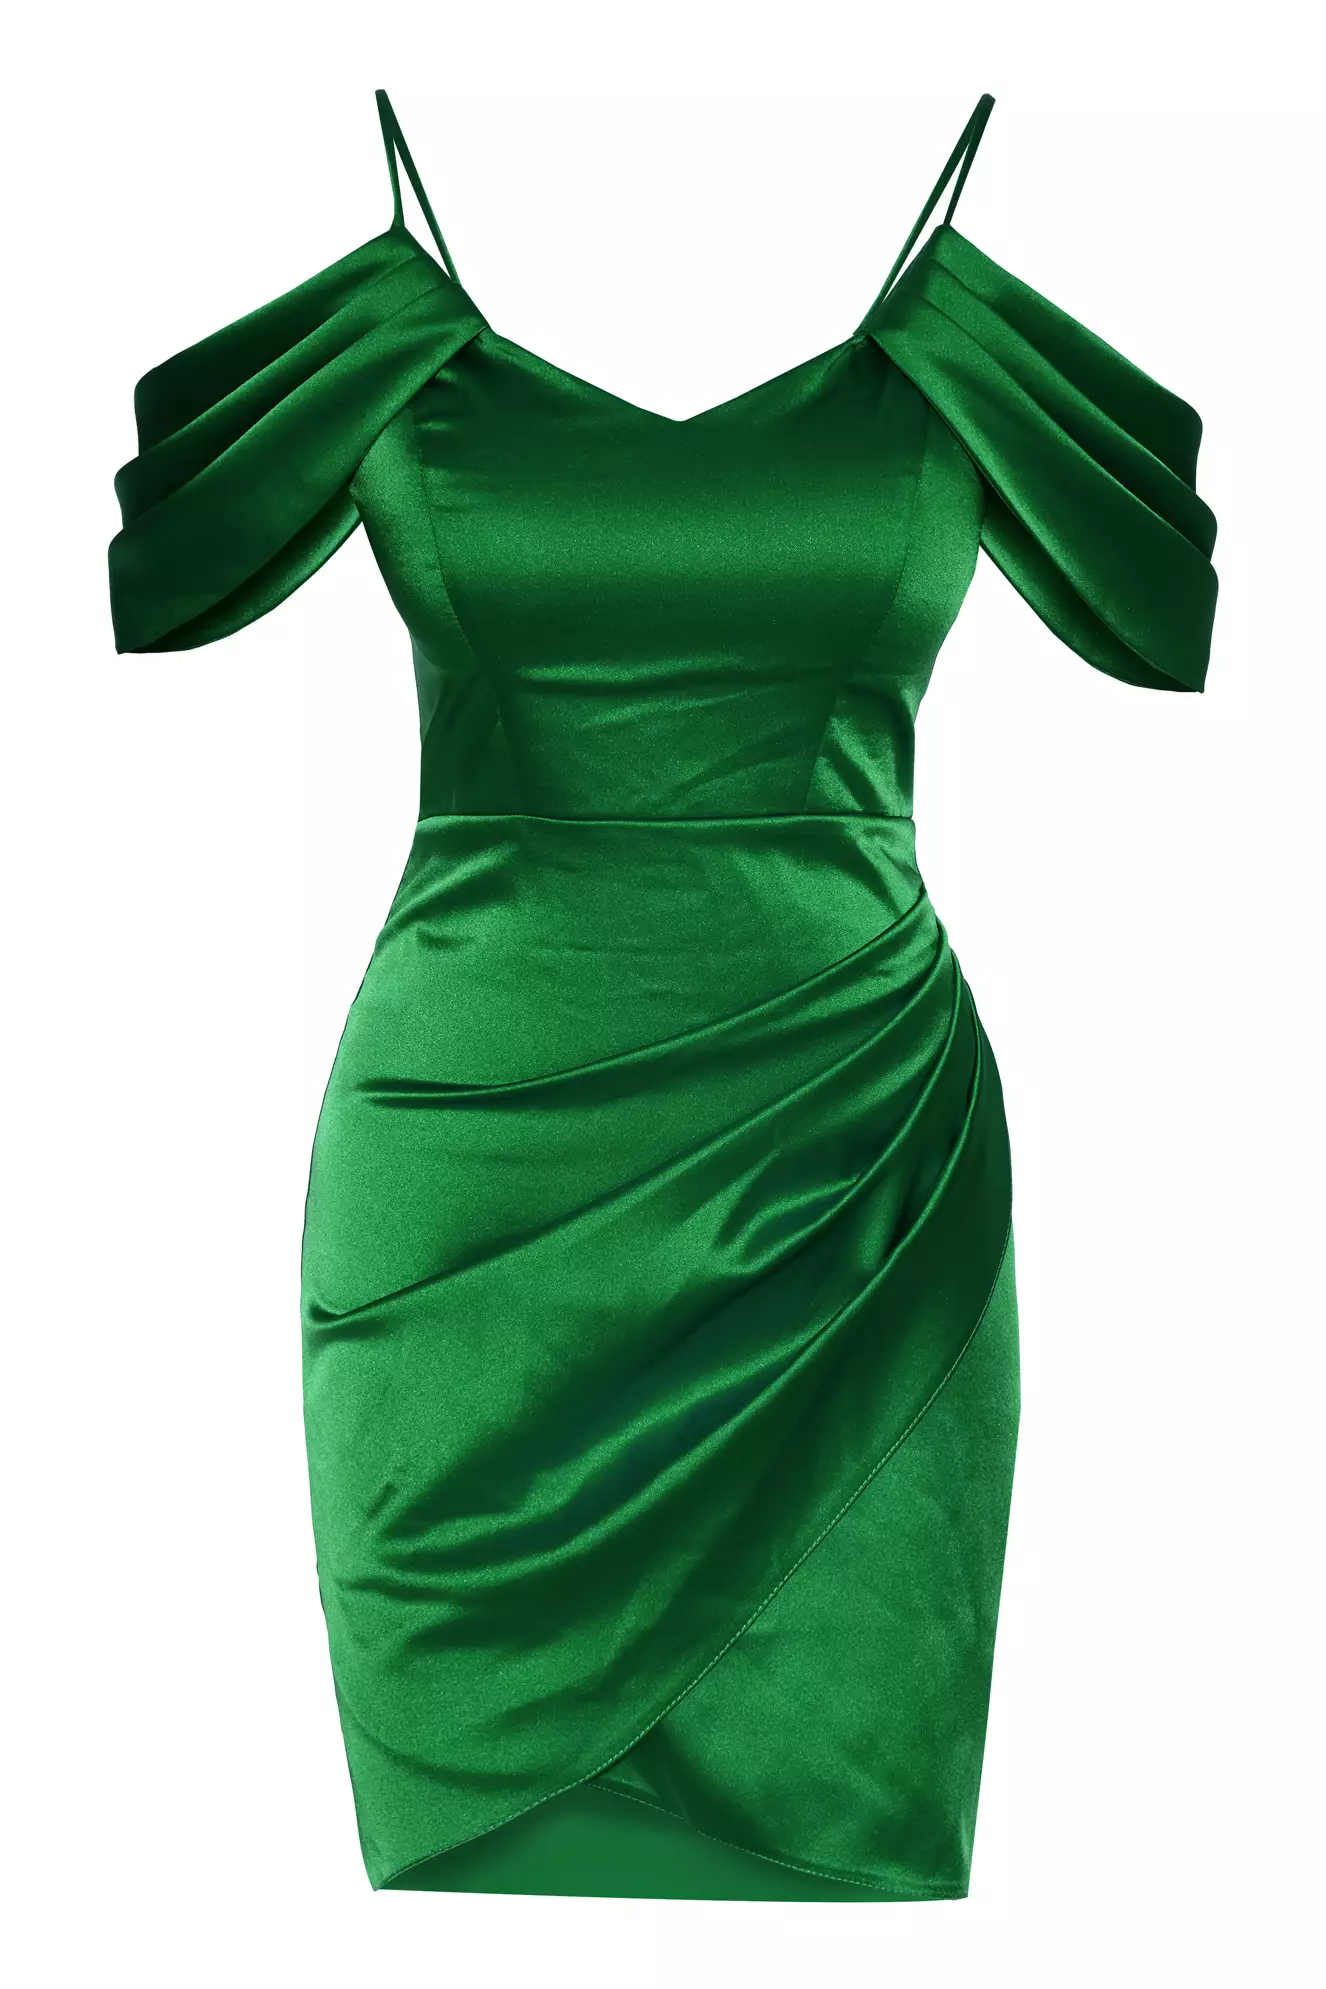 Green satin sleeveless mini dress